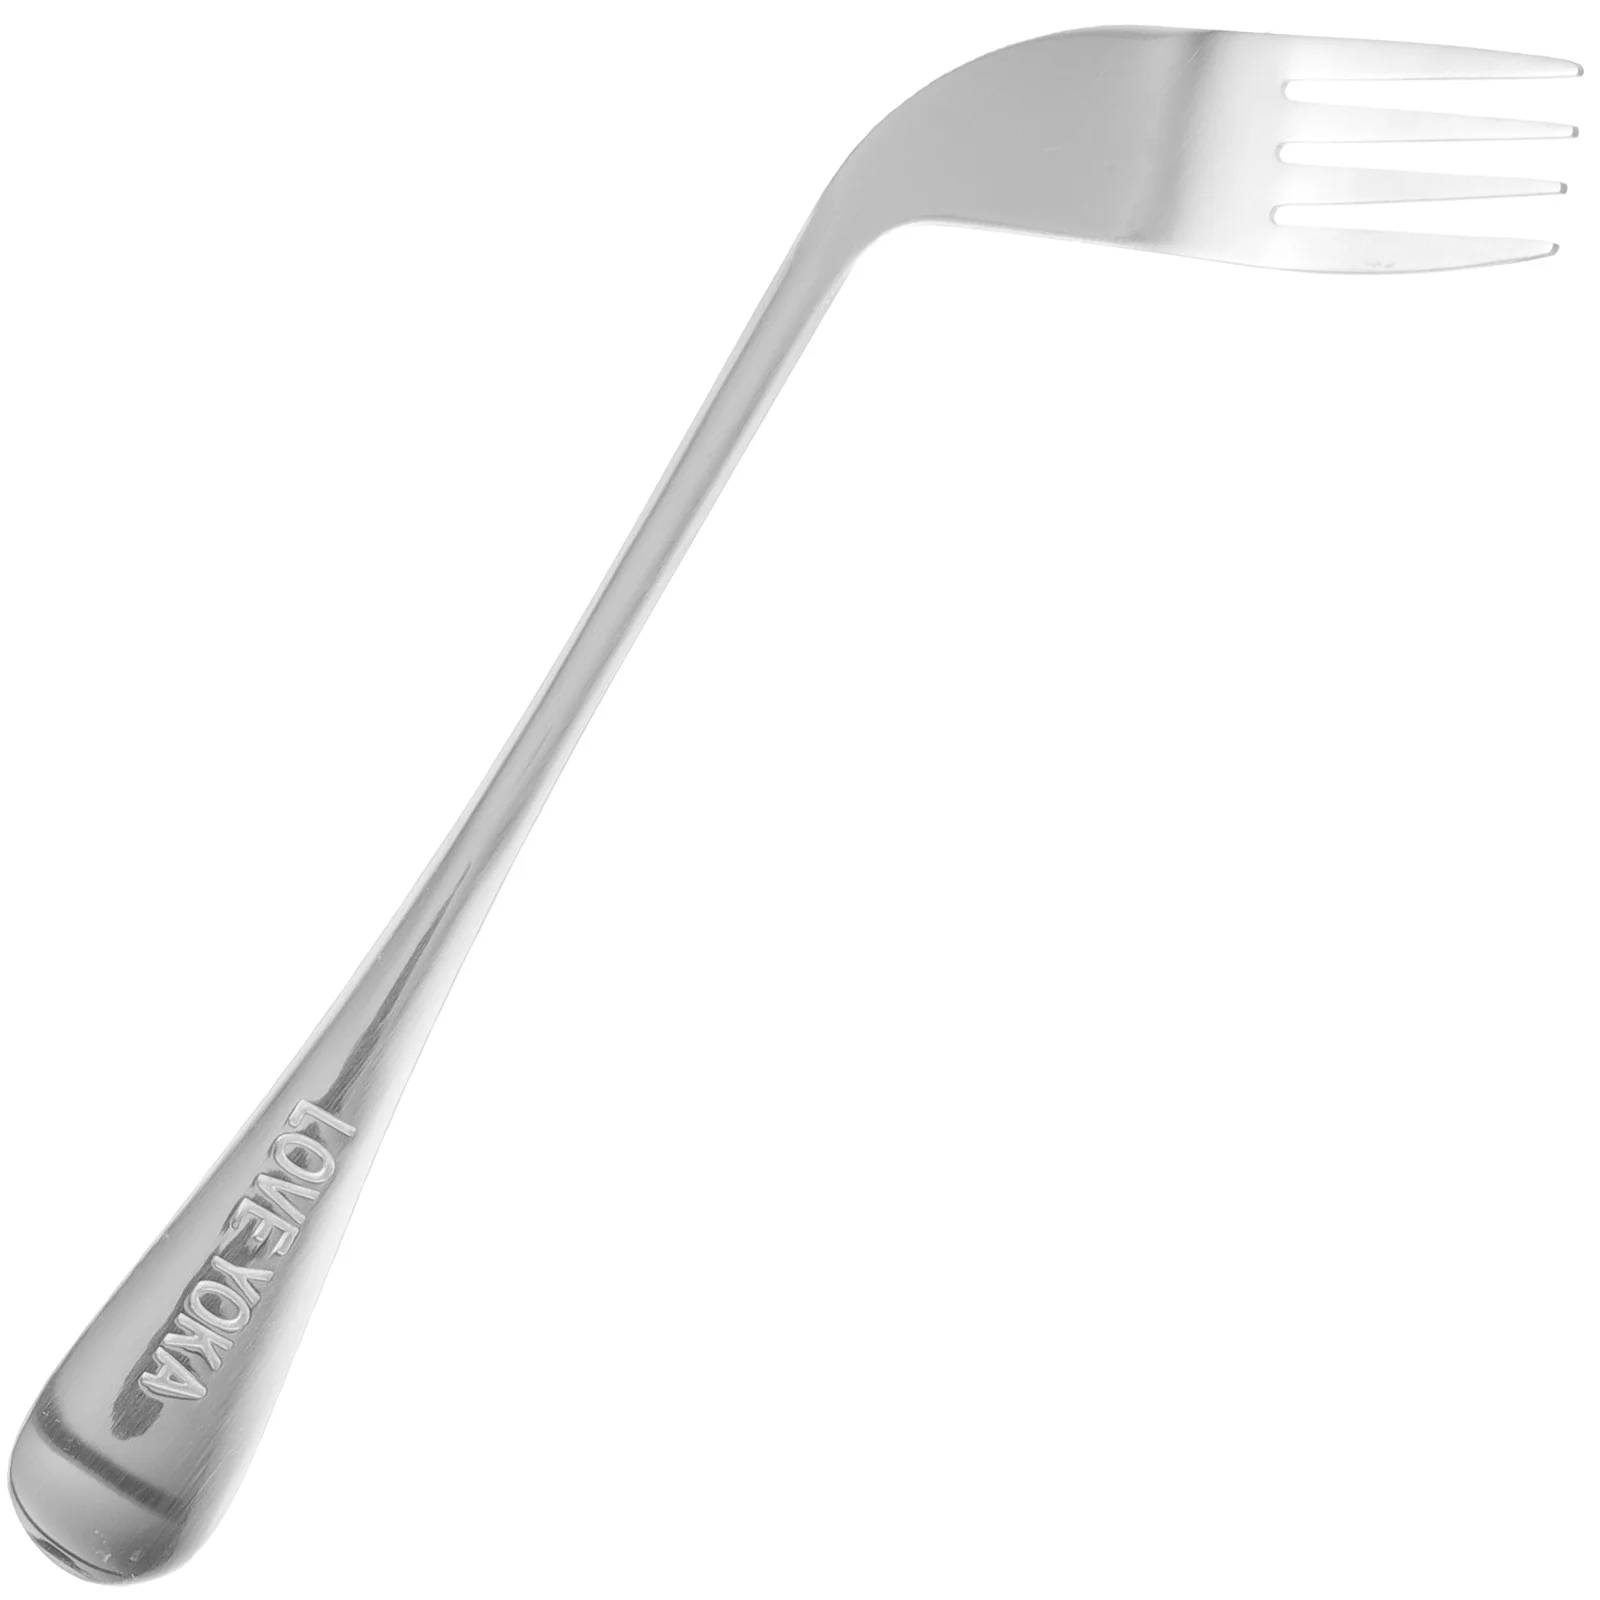 

Fork Utensils Feeding Angled Self Elderly Hand Curved Adaptive Eating Steel Stainless Silverware Forks Aid Disabled Tremor